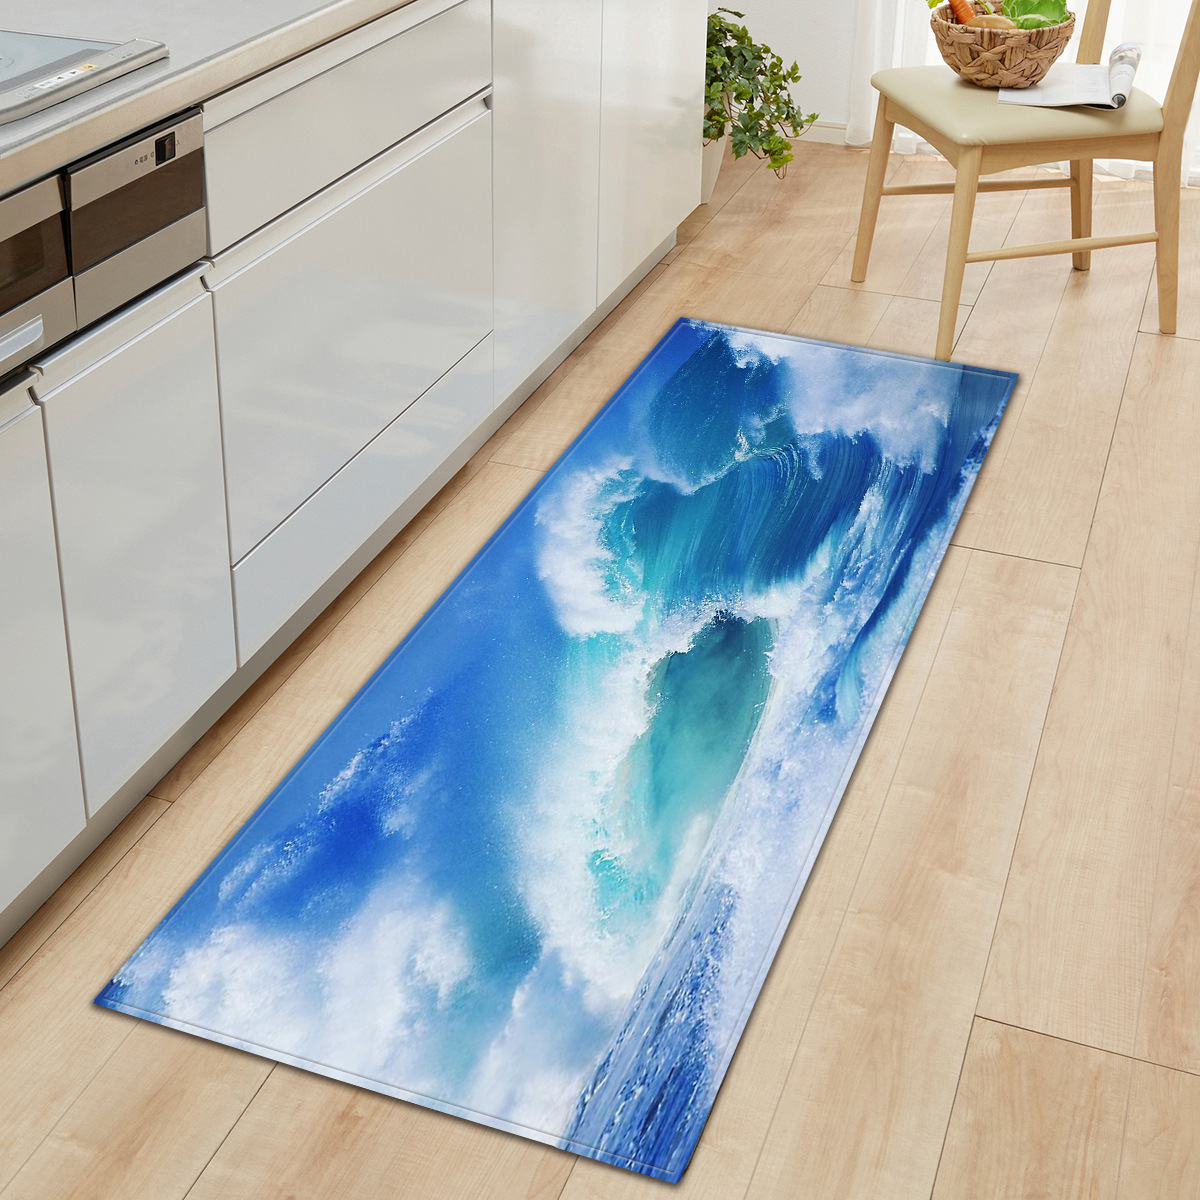 Ocean Wave Kitchen Mat Floor Mat Carpet Anti-Slip Backing All-Weather Entrance Doormat Soft Anti-Fatigue Rug Carpet Mats